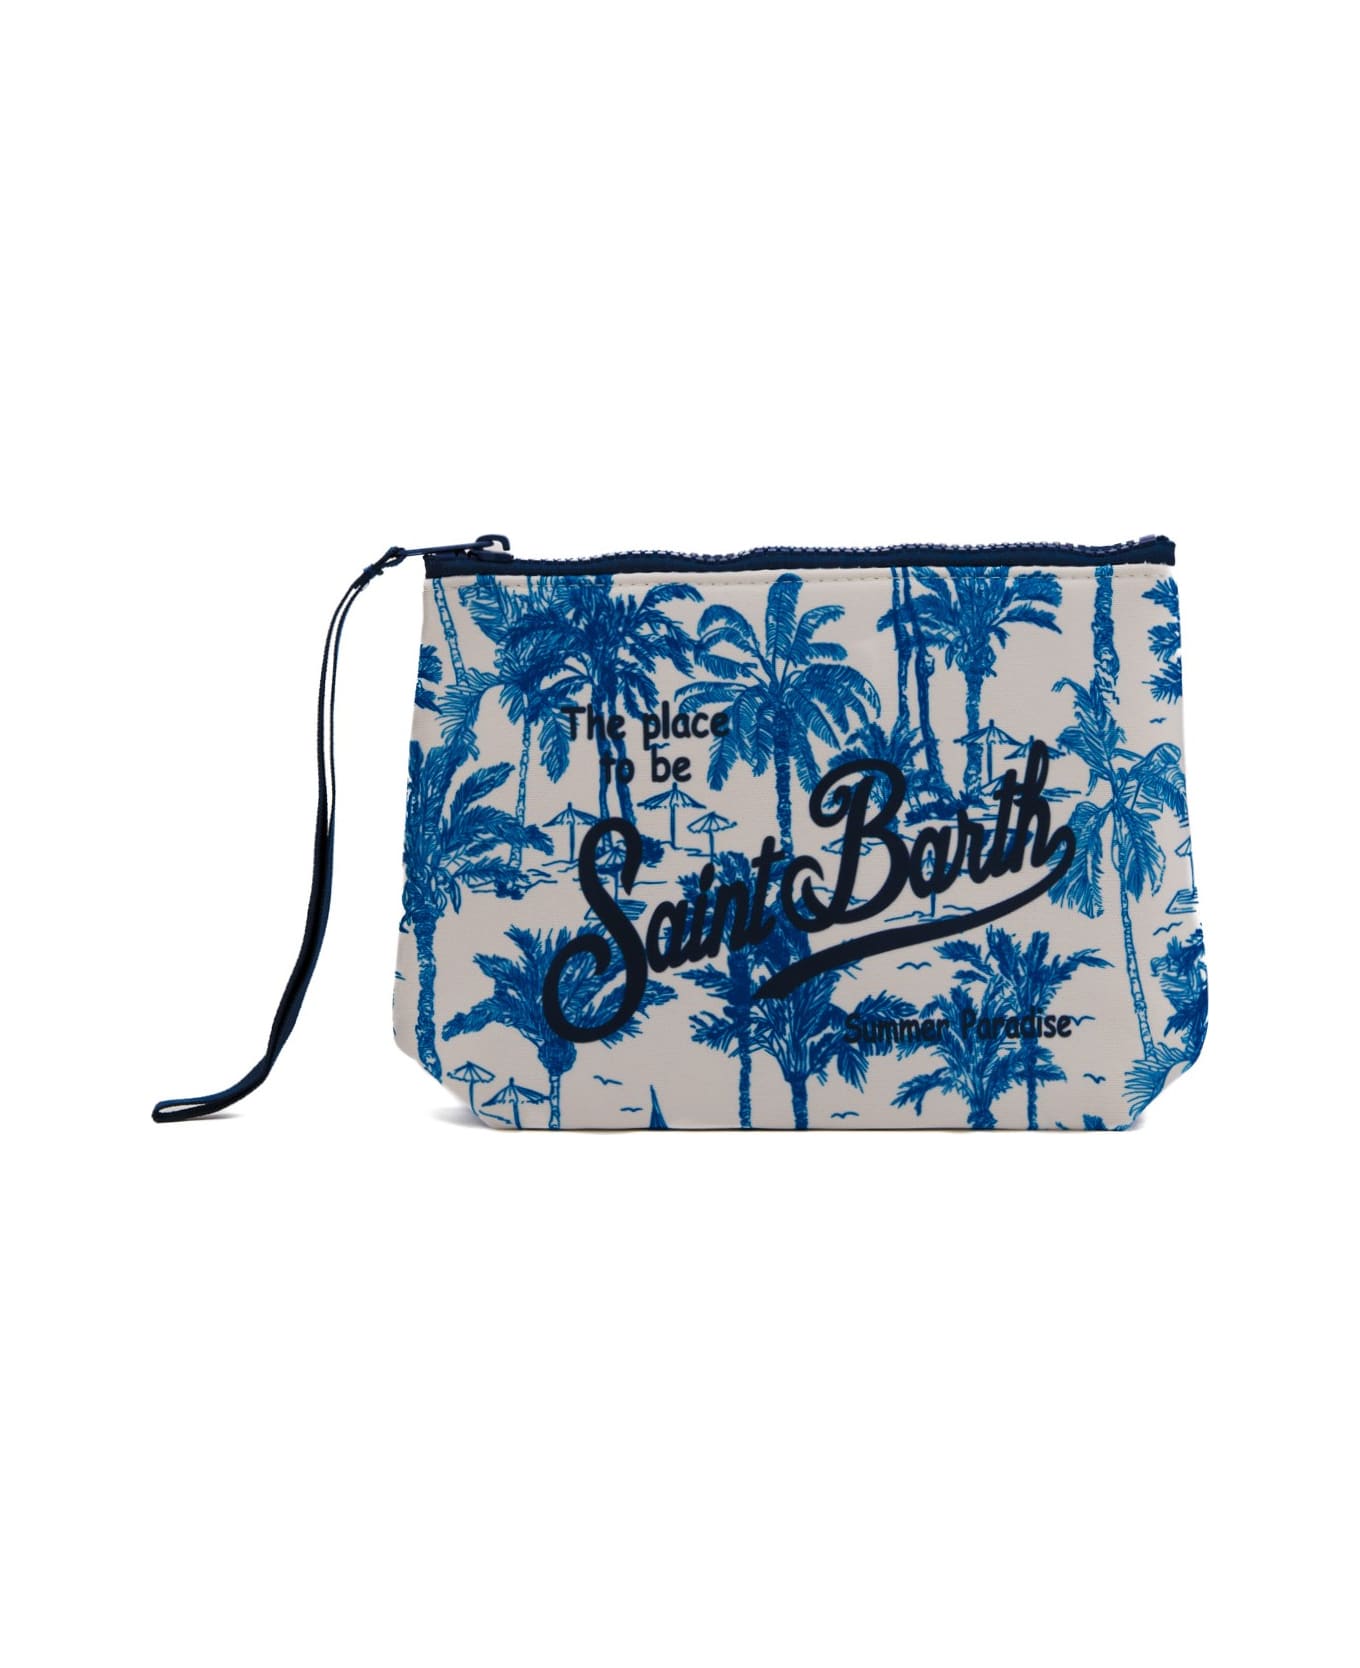 MC2 Saint Barth Aline Saint Beach Clutch Bag In Neoprene - Blu/bianco